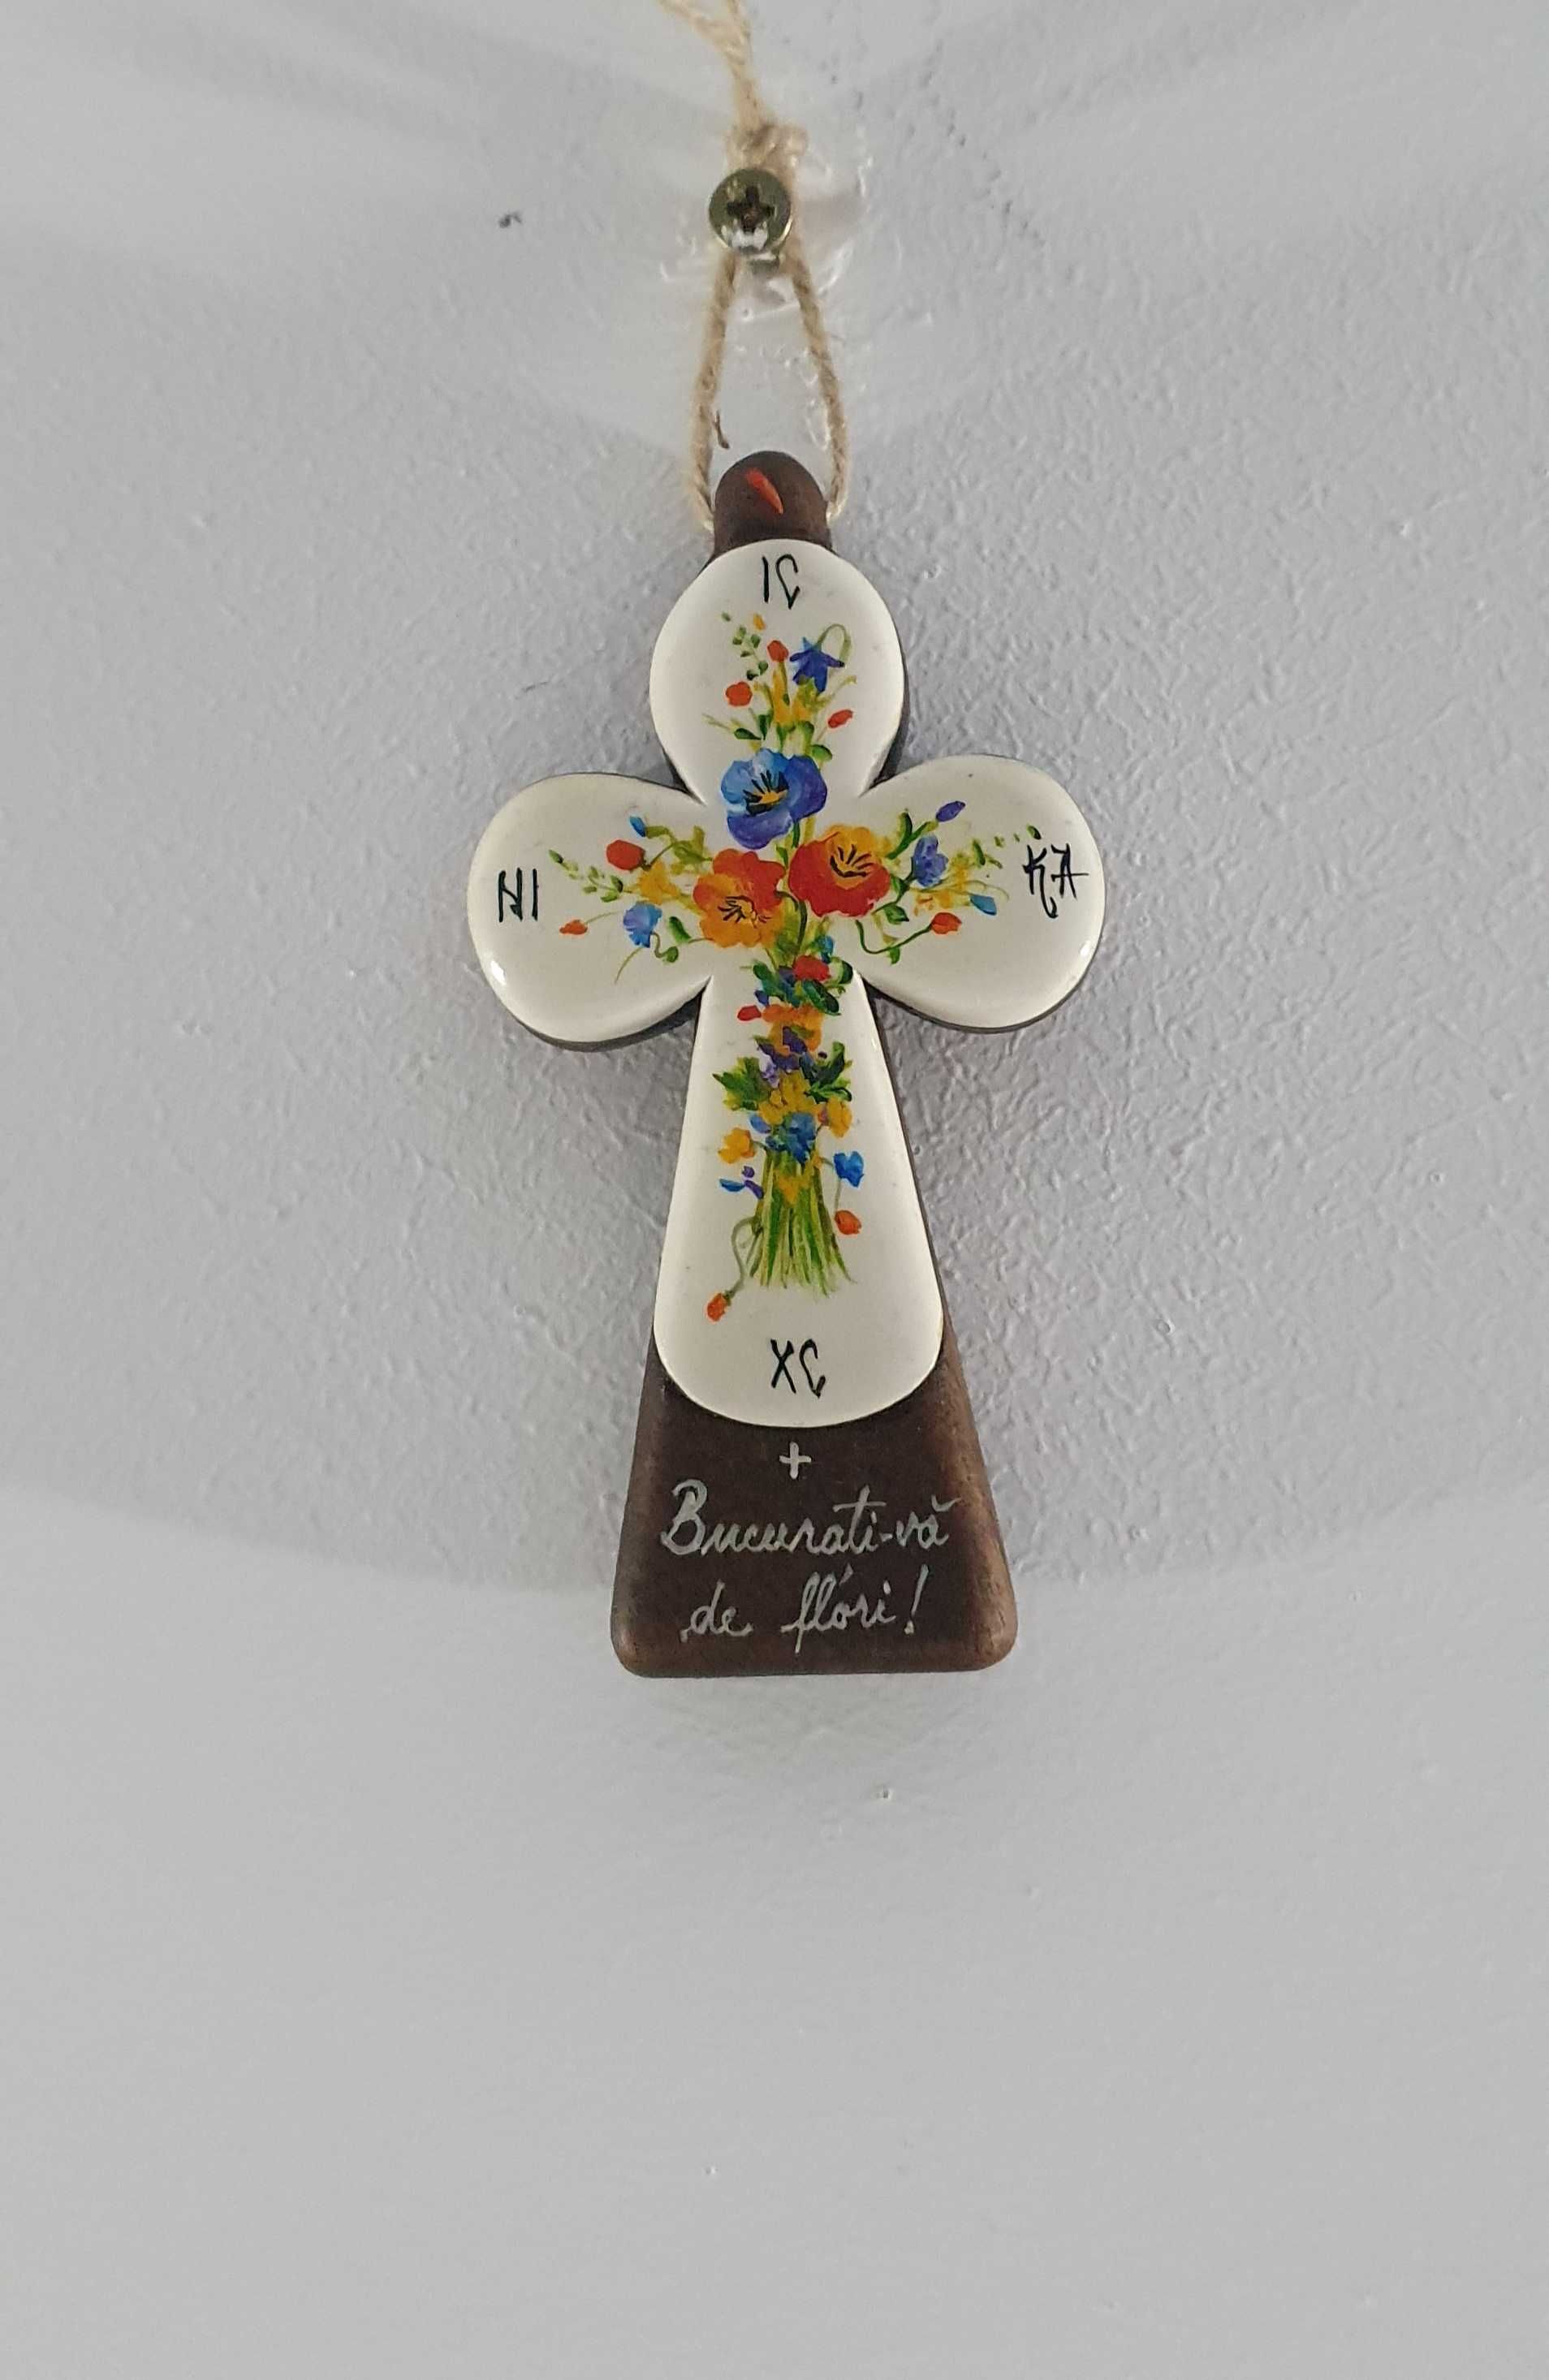 Cruce/icoana lemn pictata, cu flori, pasari,handmade, unicat